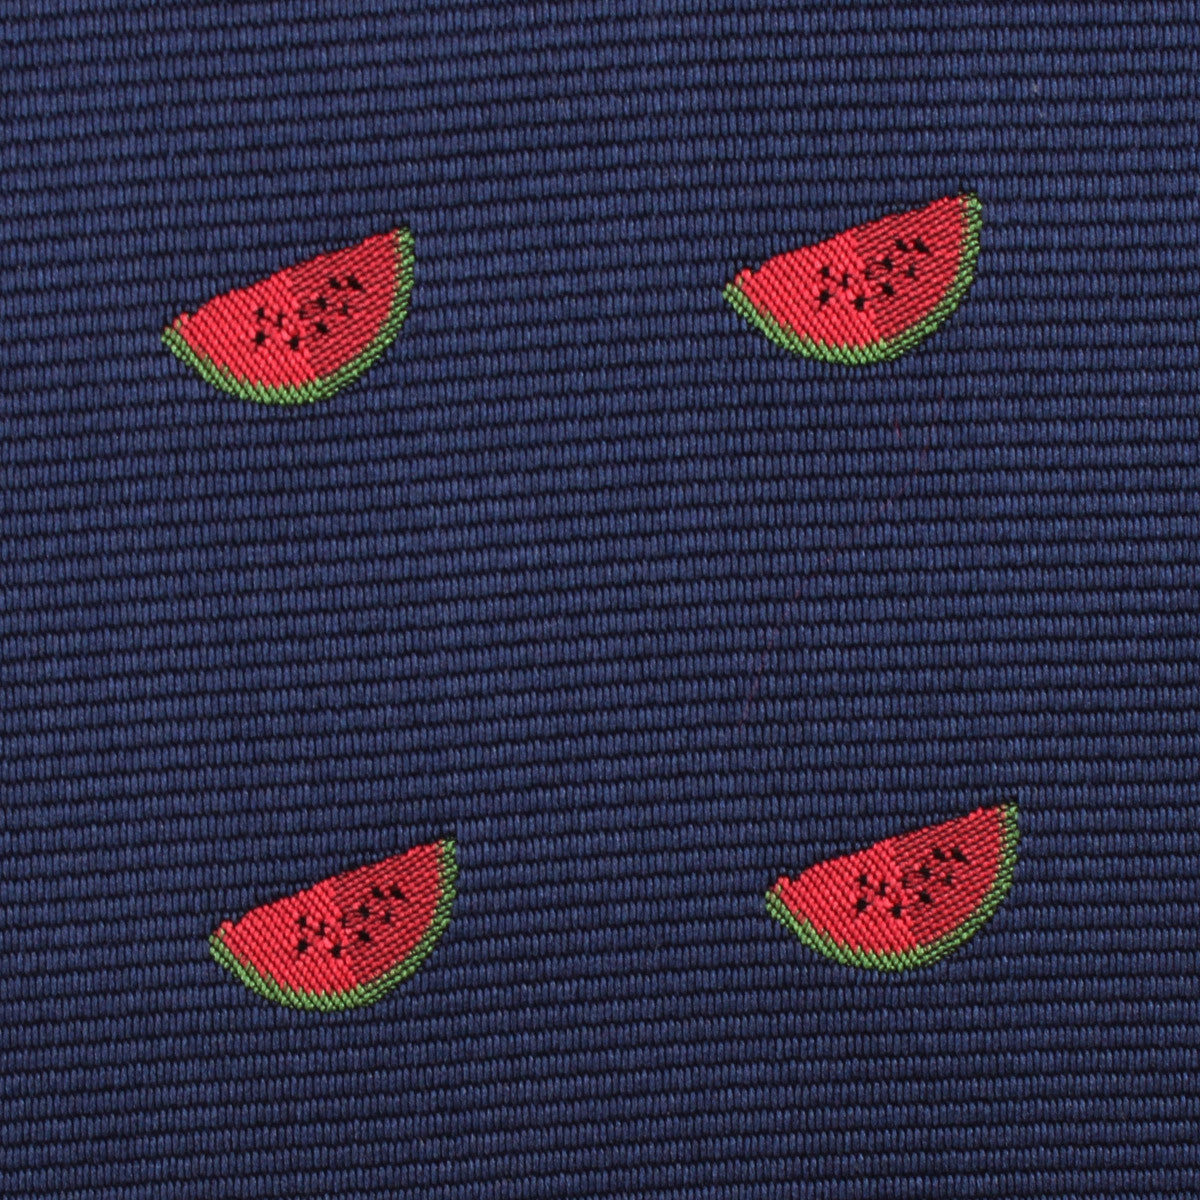 Watermelon Fabric Self Diamond Bowtie